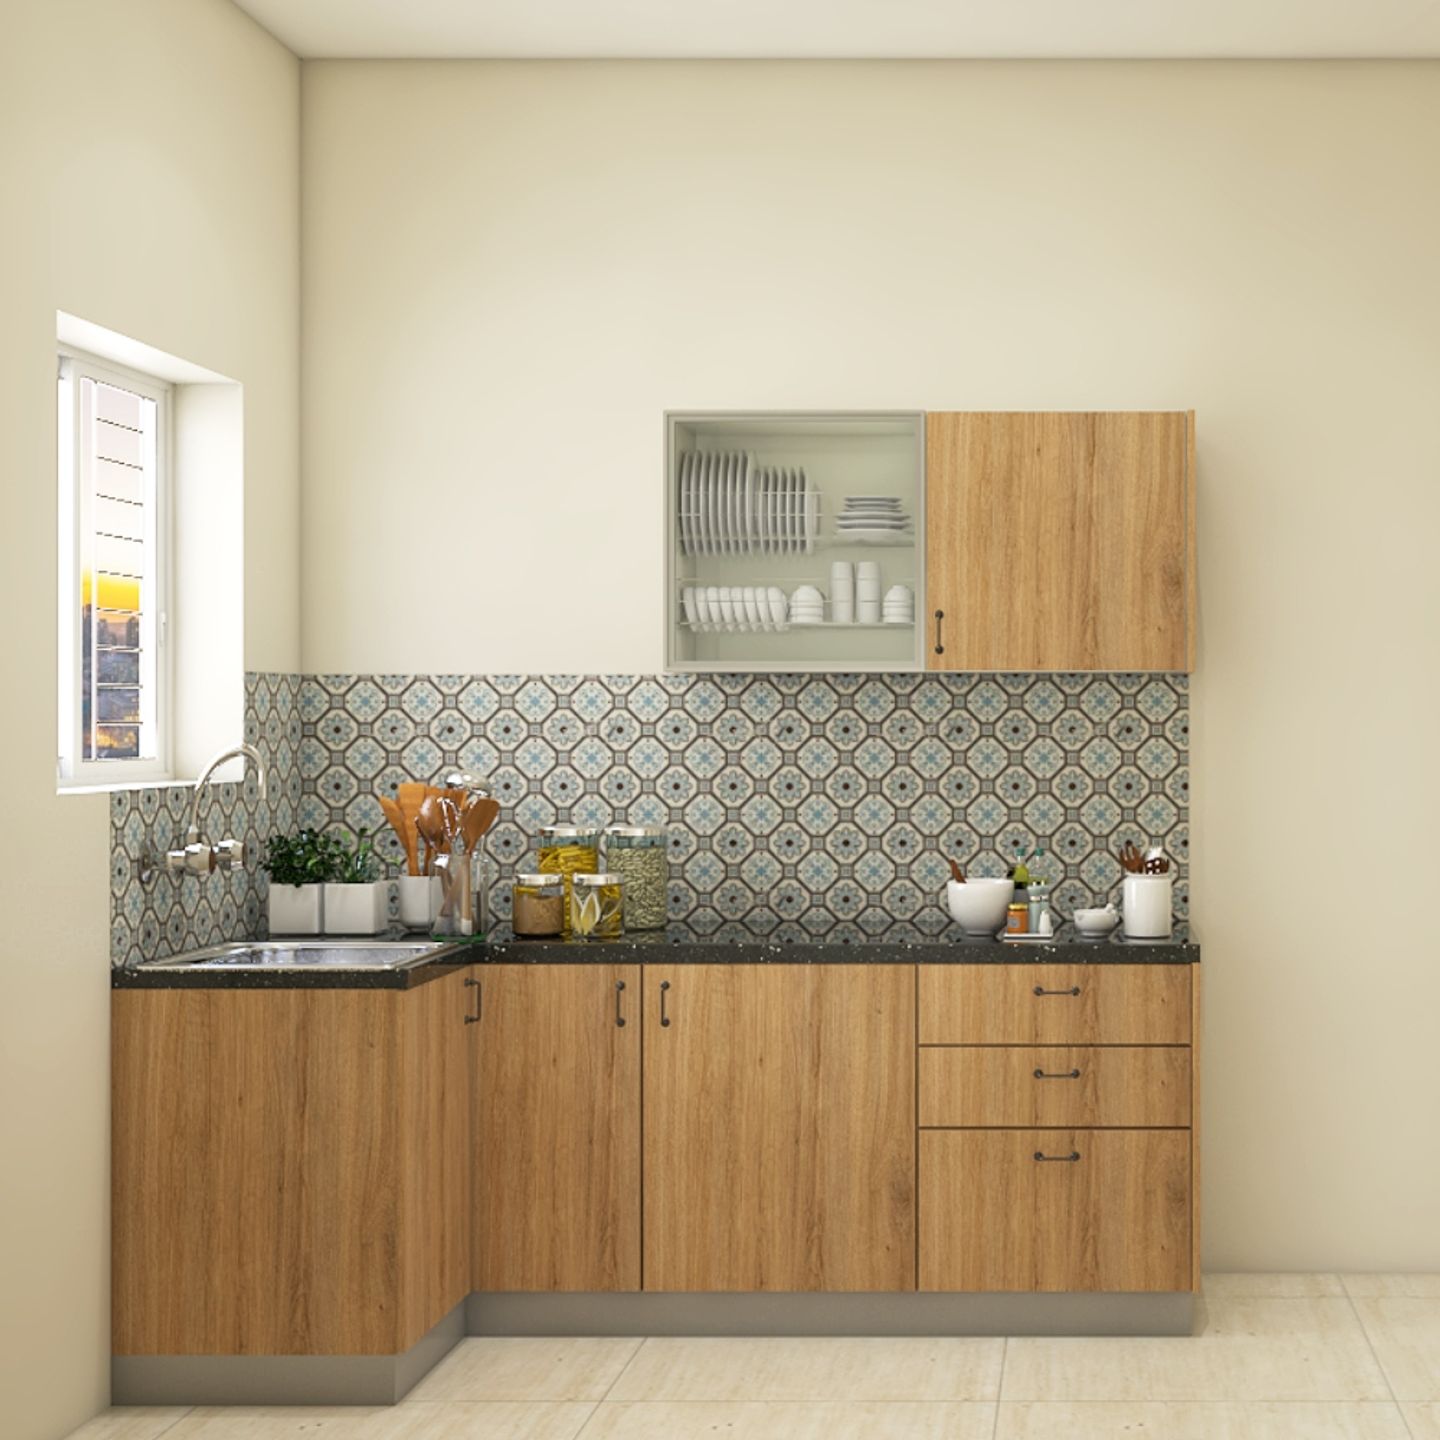 L-Shaped Compact Kitchen Design With A Granite Countertop - Livspace